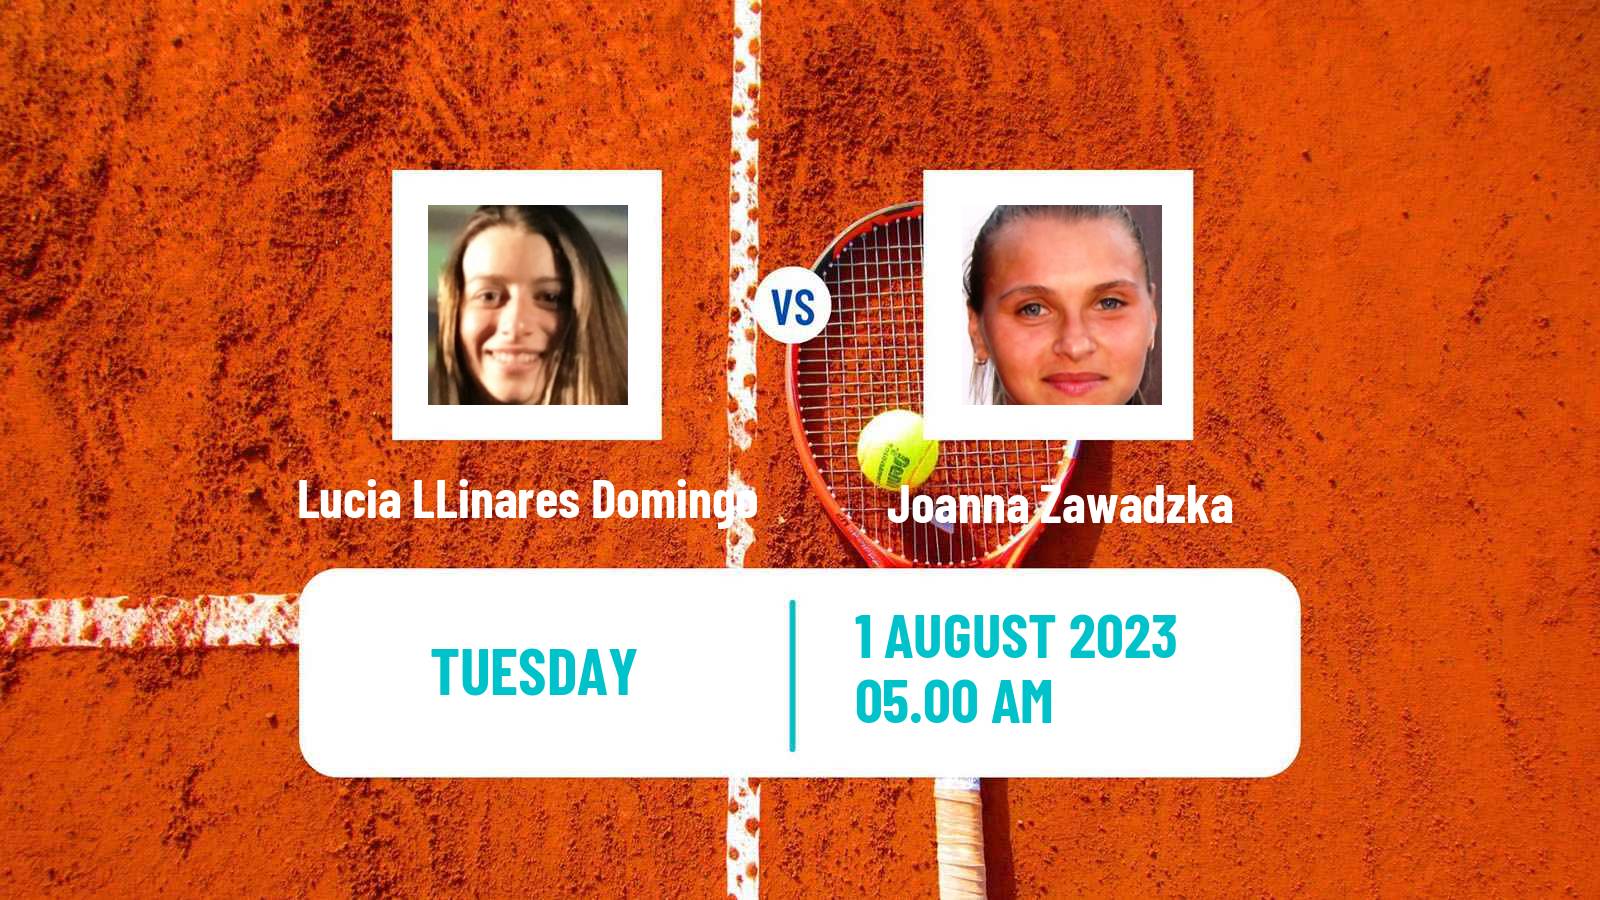 Tennis ITF W15 Monastir 51 Women Lucia LLinares Domingo - Joanna Zawadzka